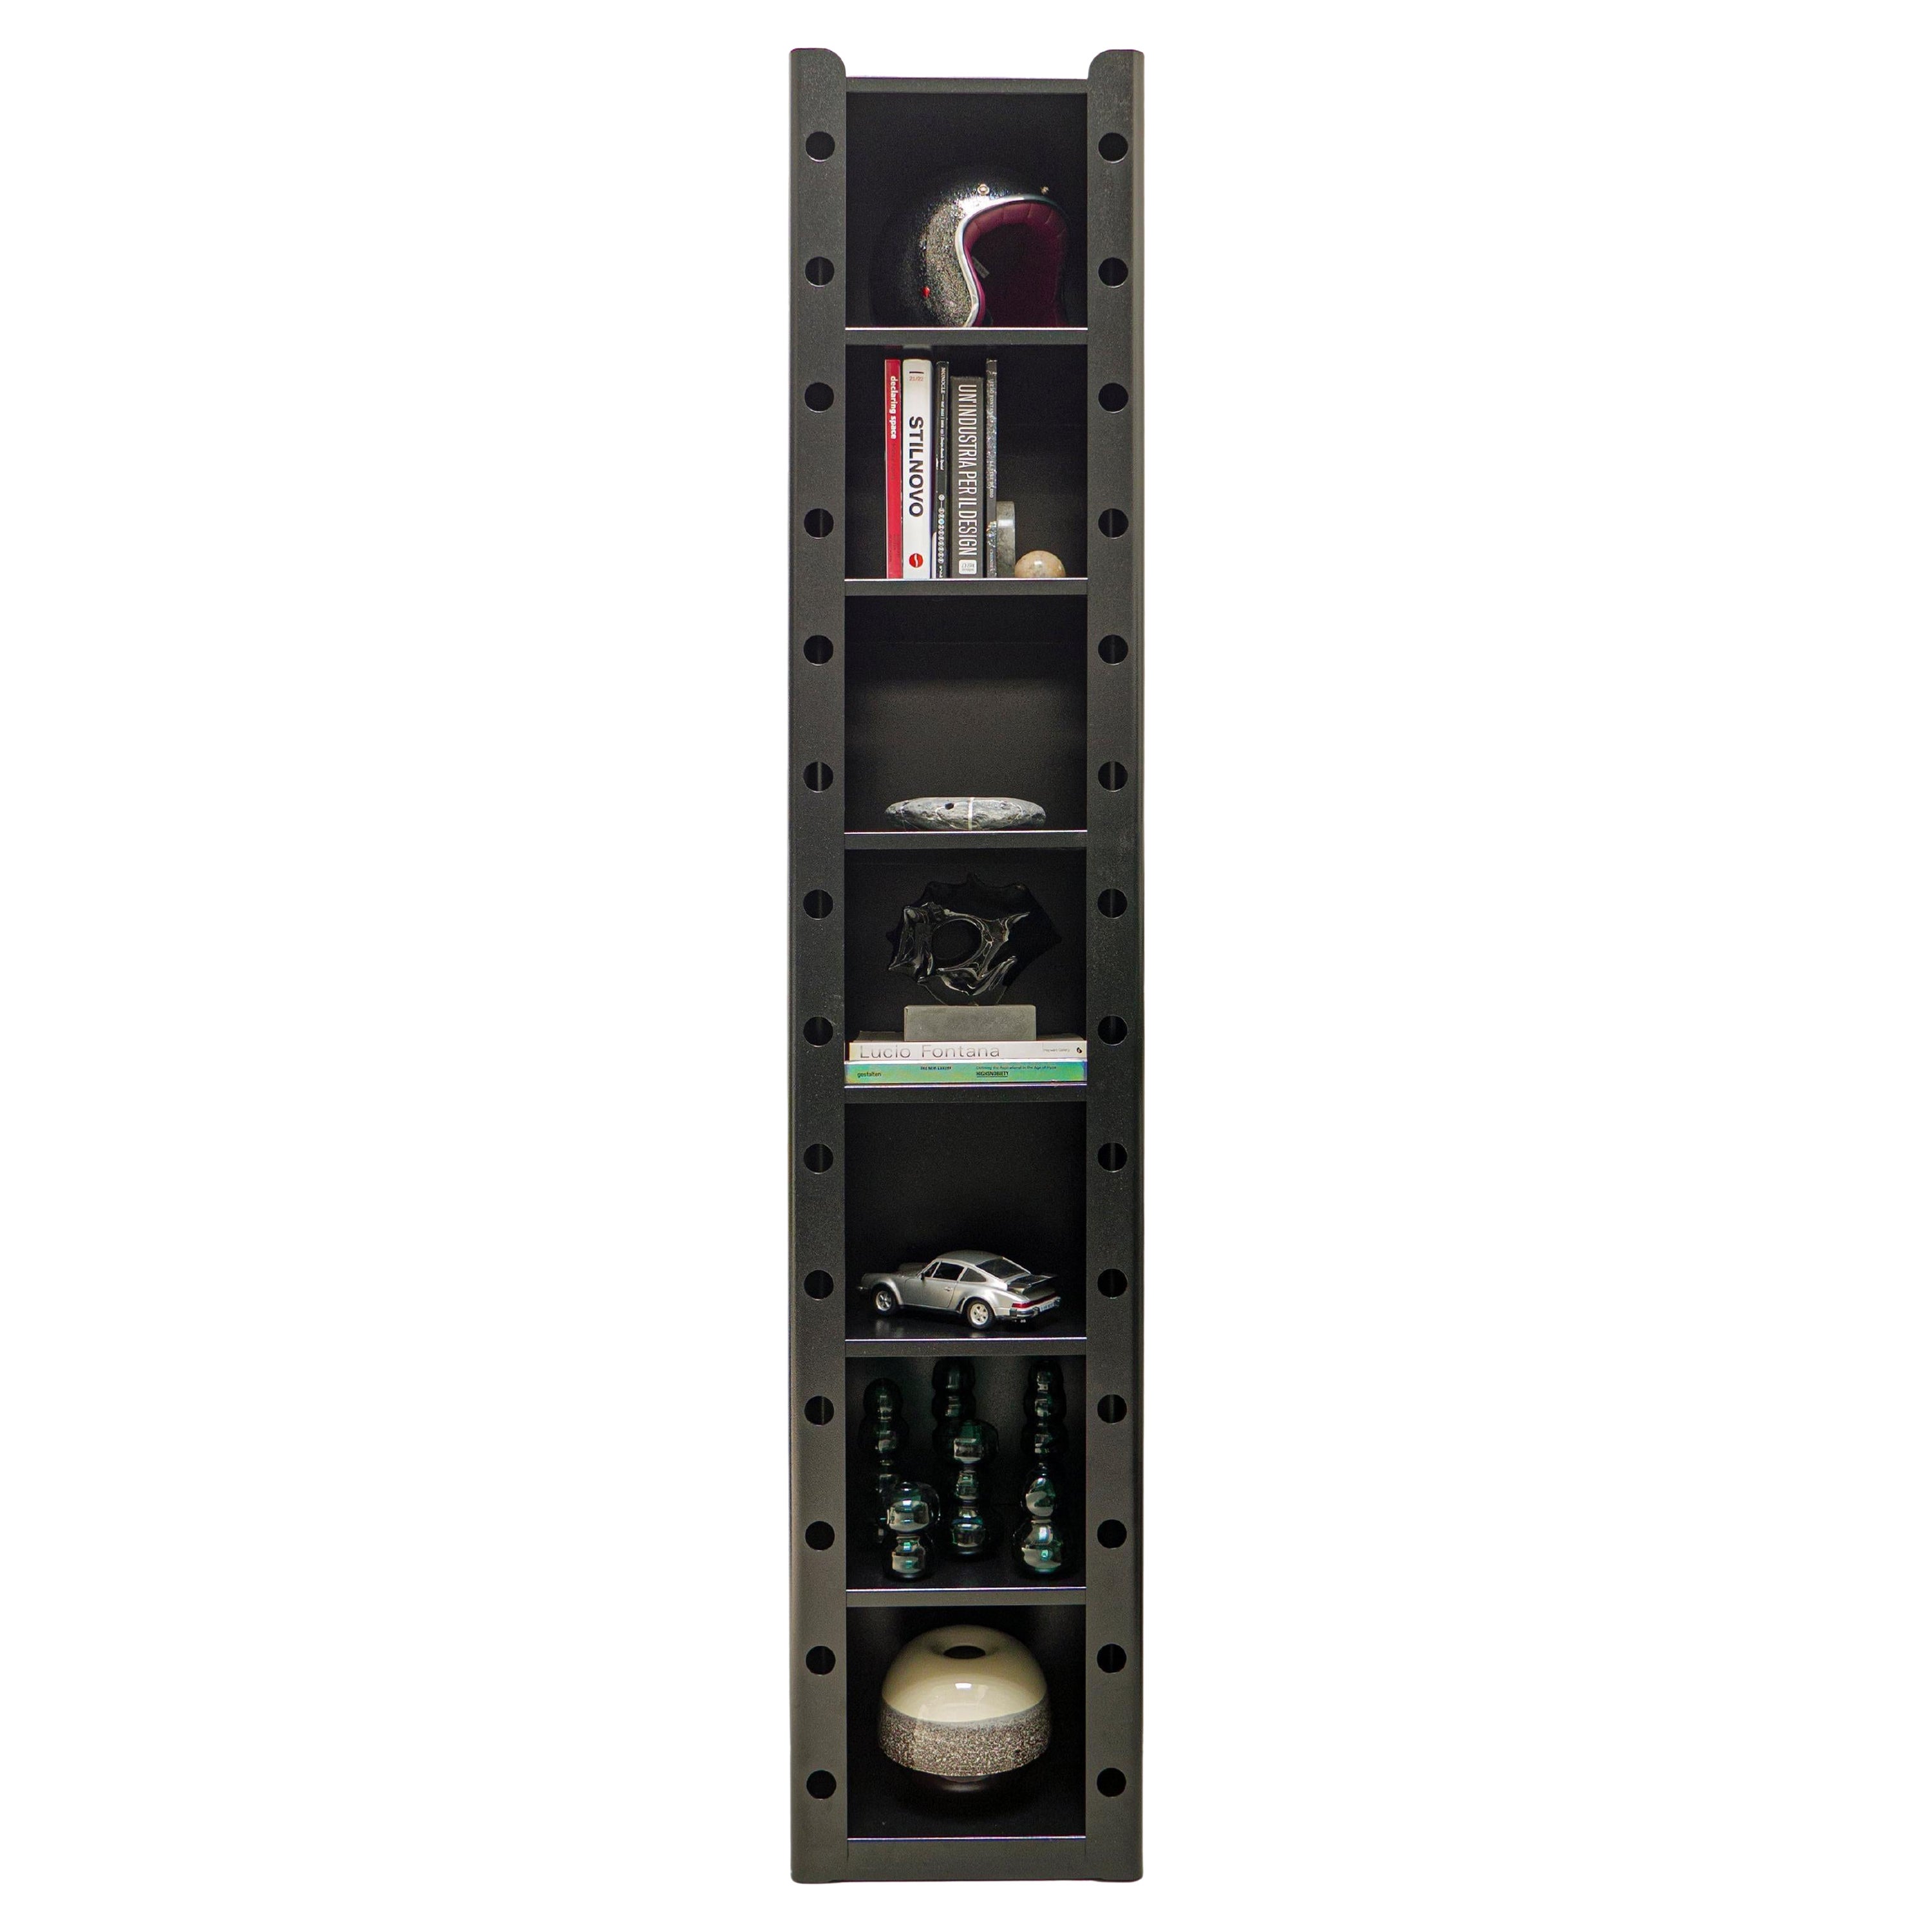 Spinzi Meccano Bookcase, Contemporary 21st Century Industrial Metal Furniture For Sale